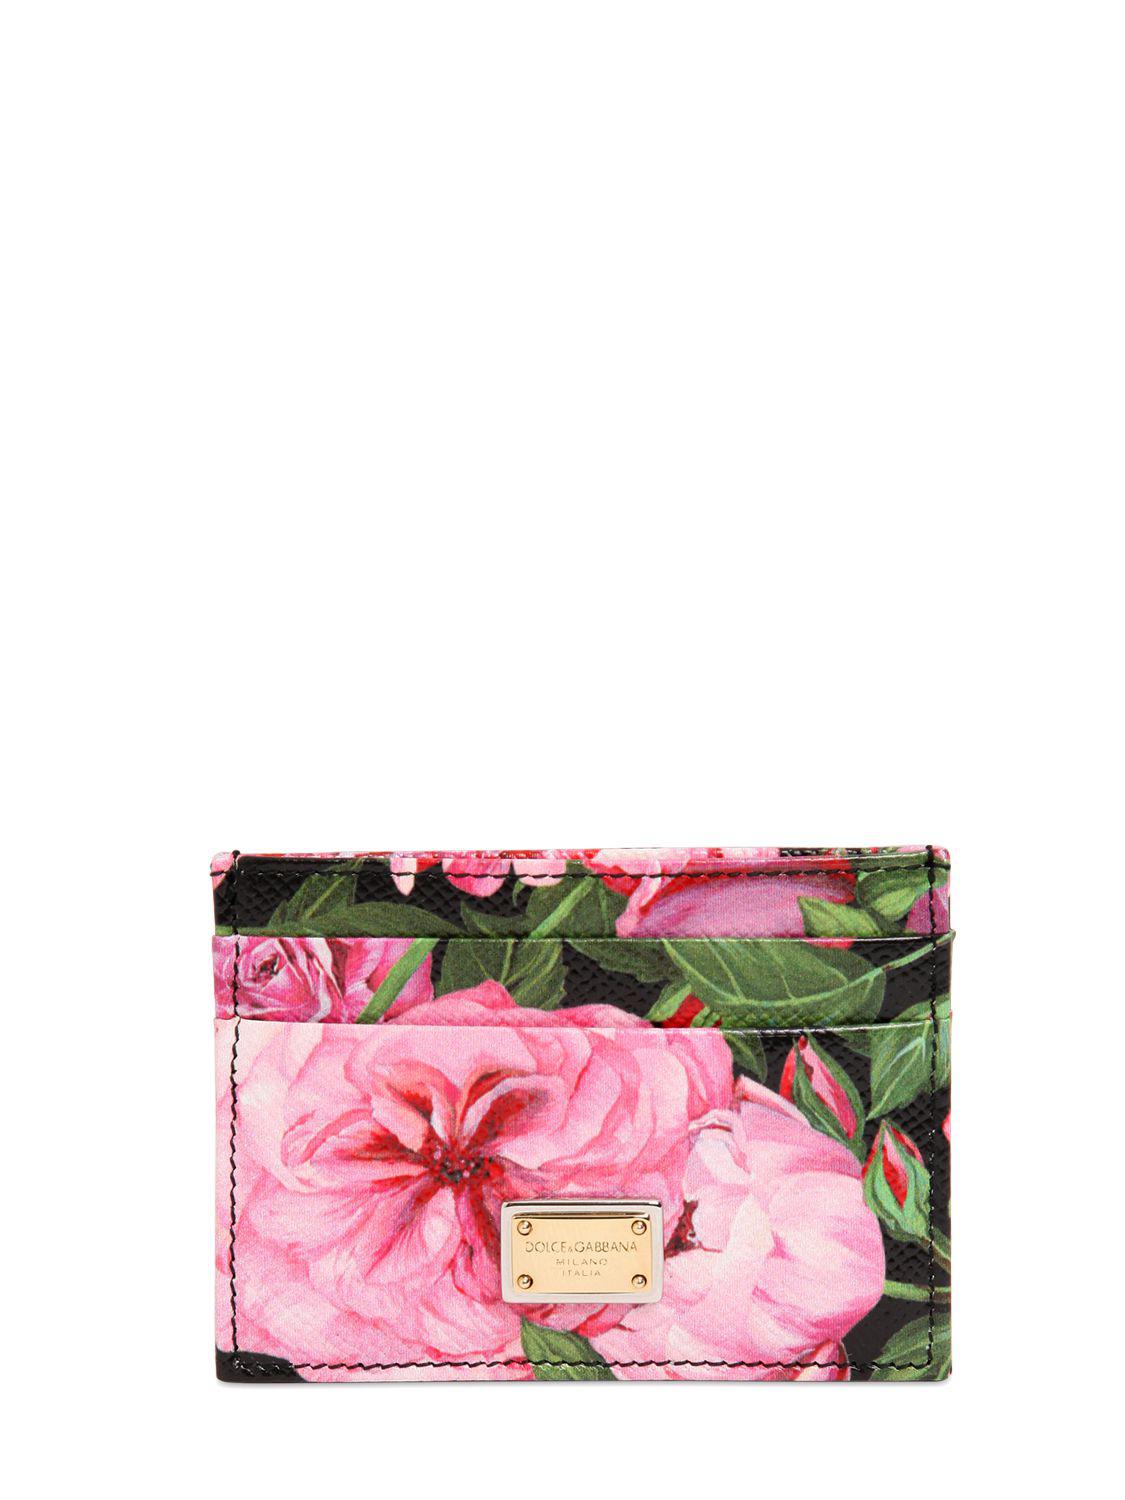 Porte-cartes En Cuir Imprimé Roses Cuir Dolce & Gabbana en coloris Rose -  Lyst